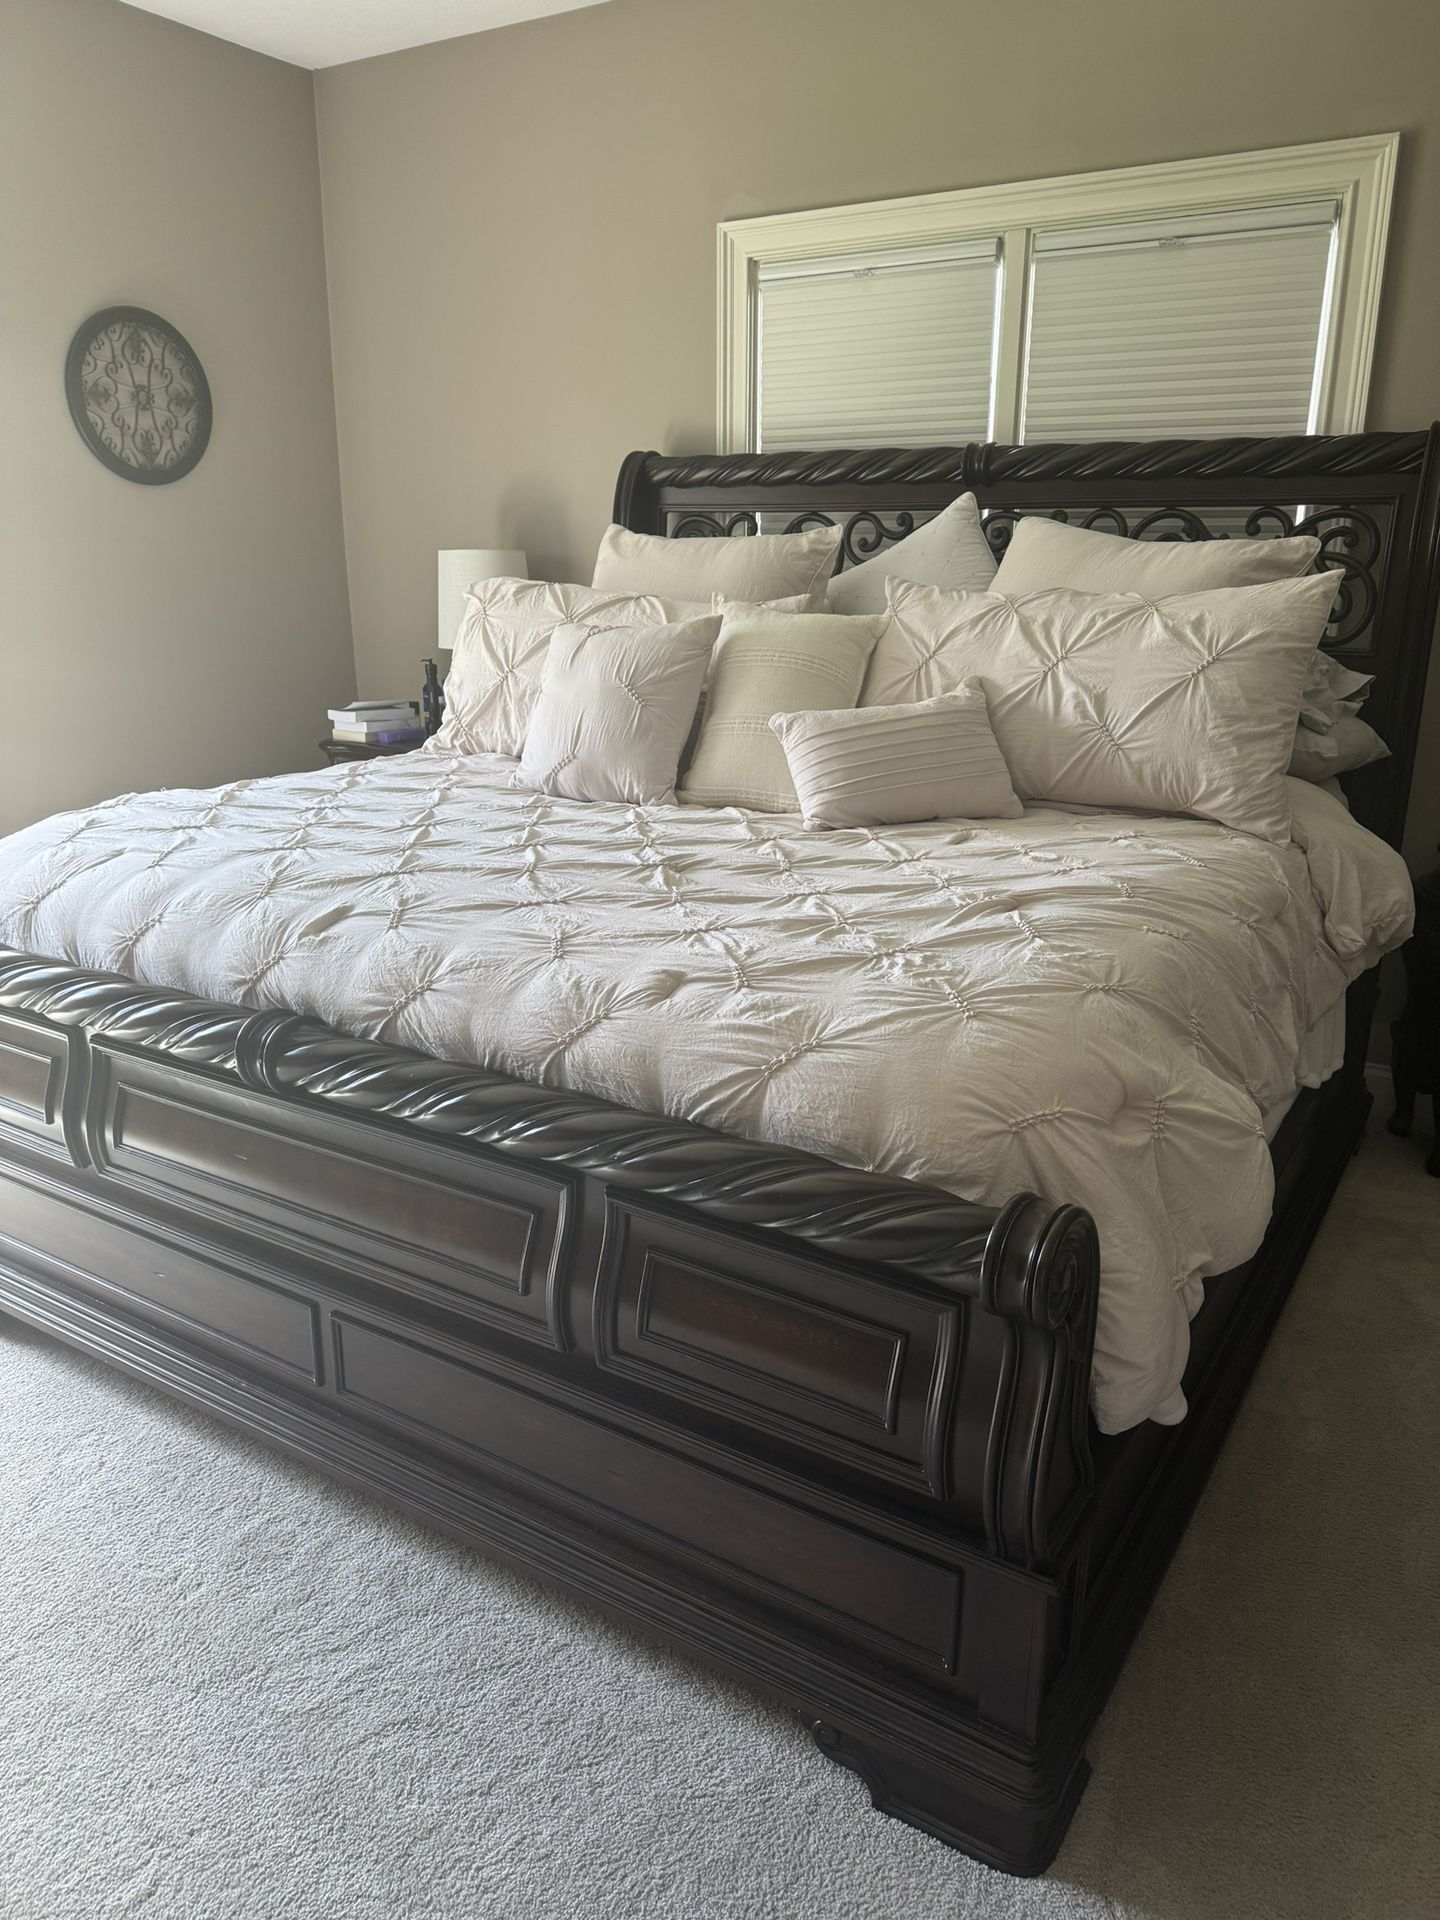 Beautiful Solid Wood King Bedroom Set